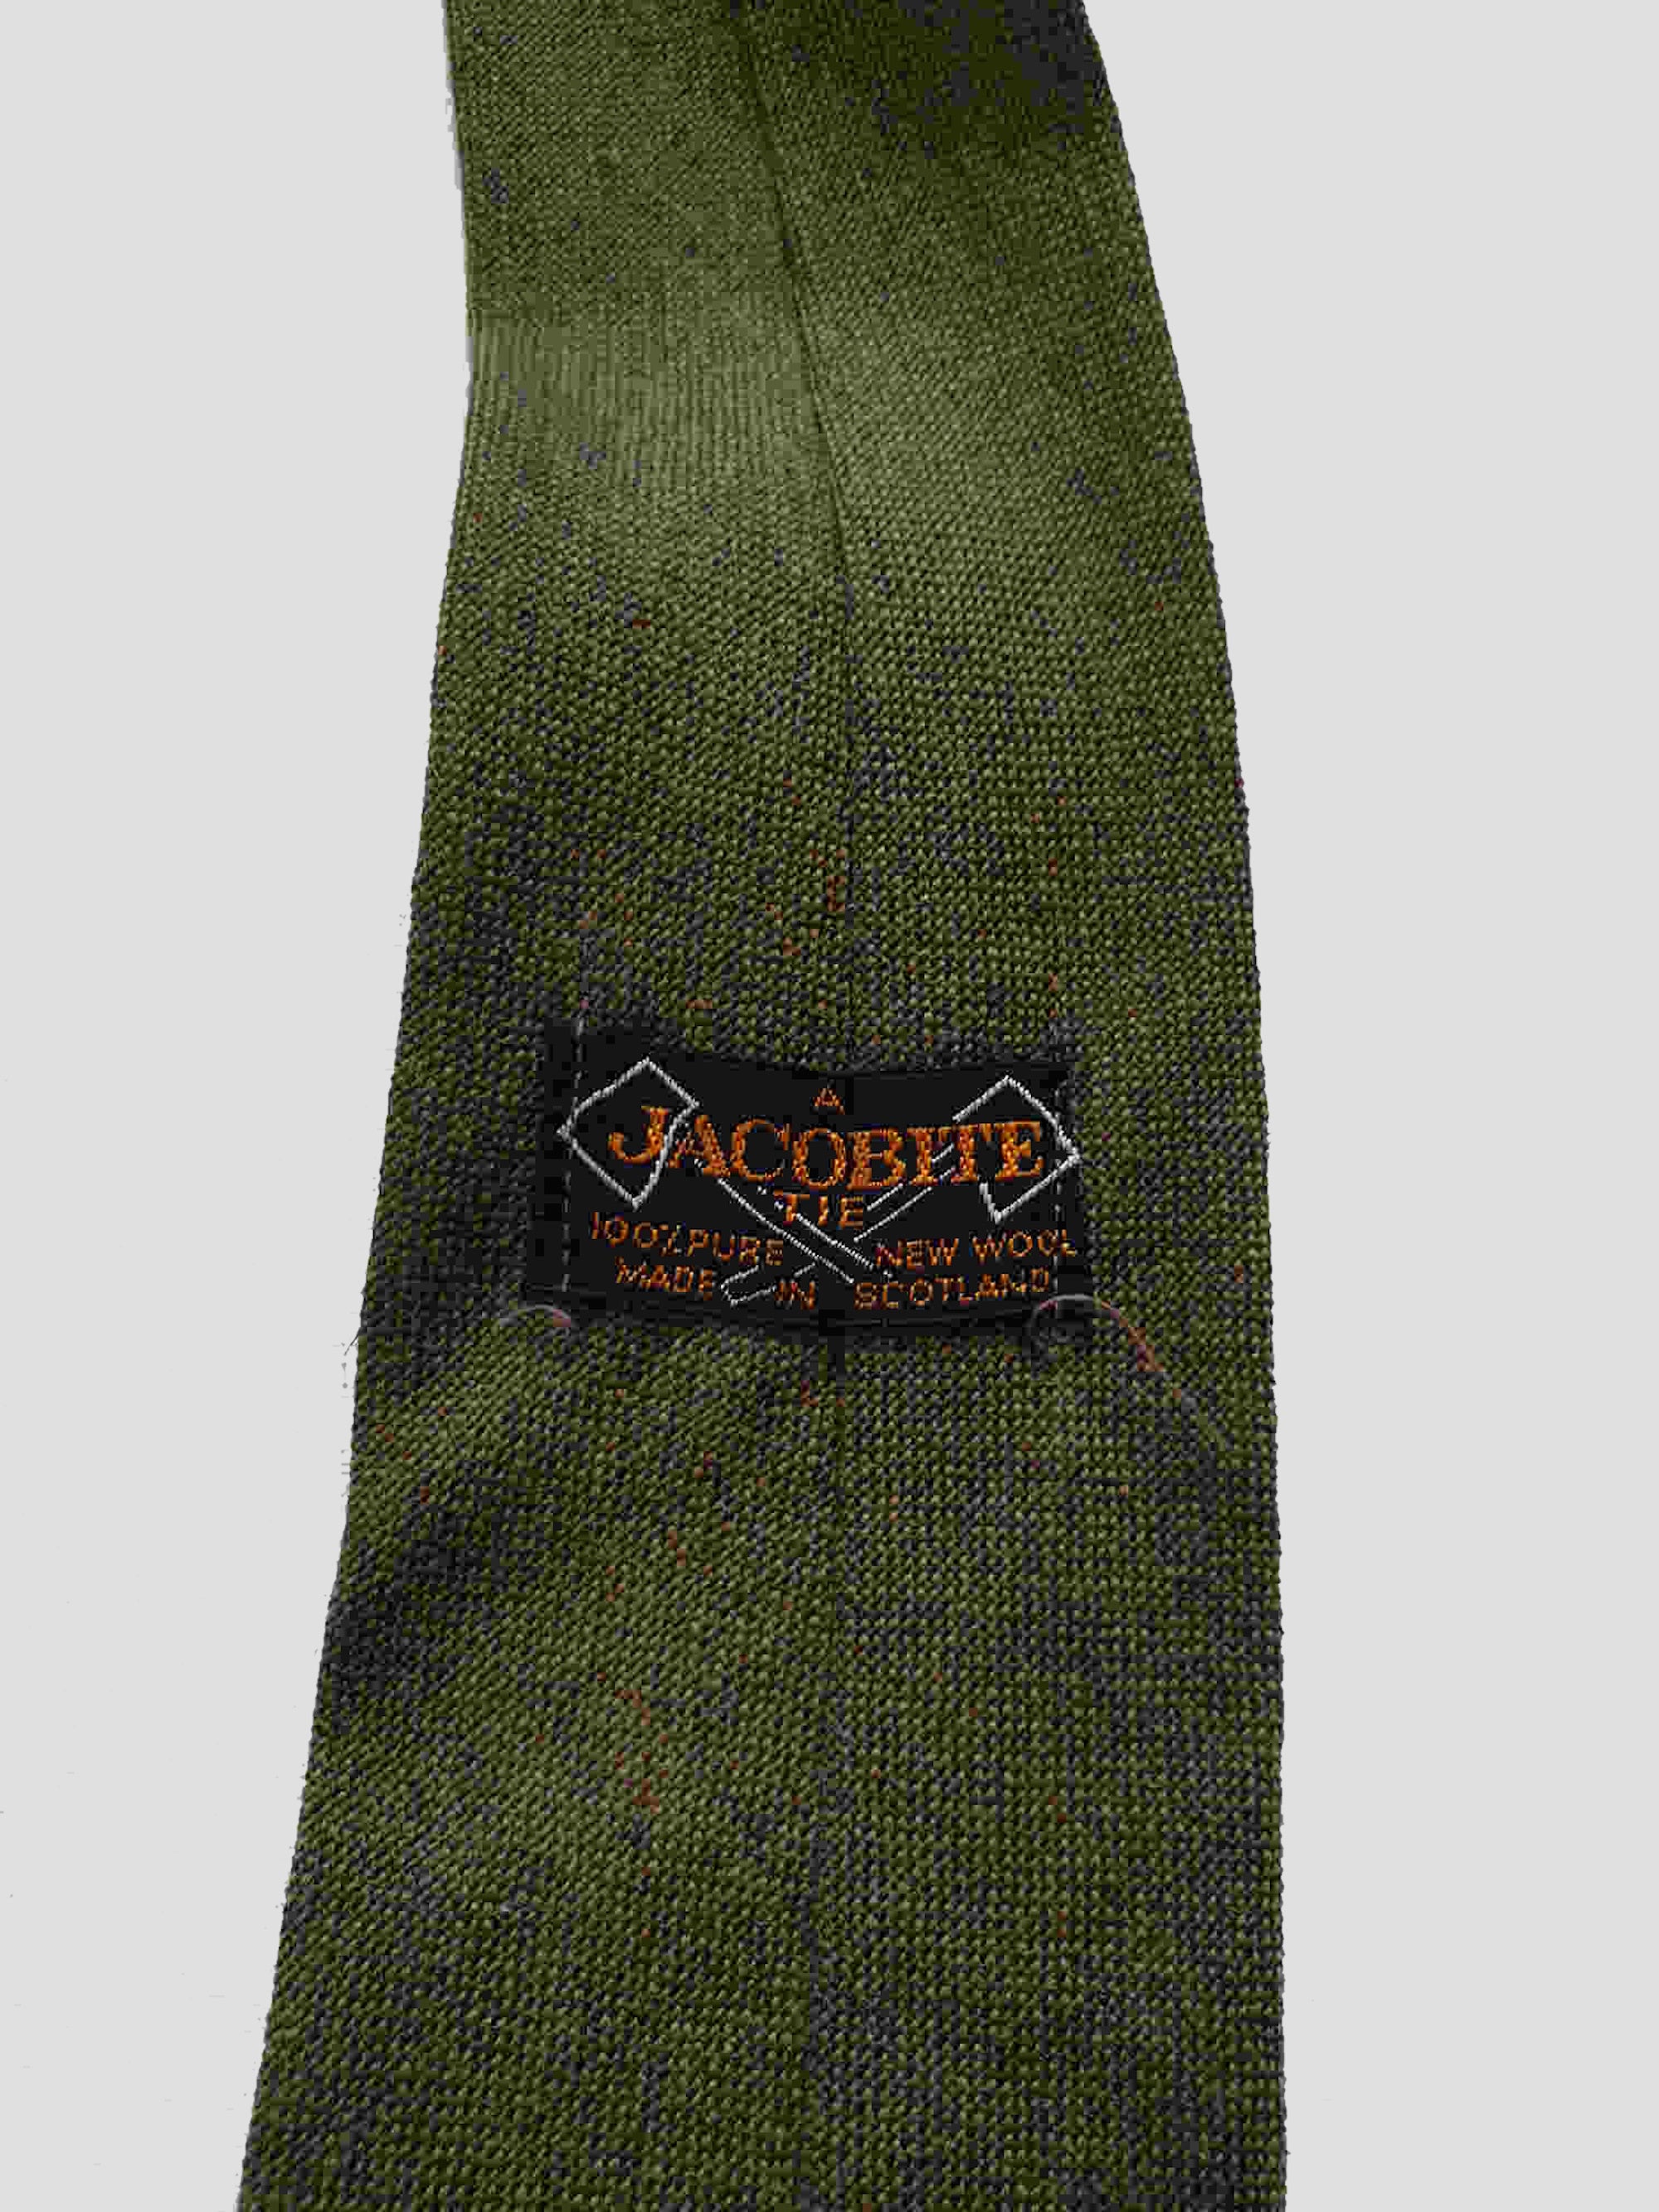 vintage scottish olive green wool tie jacobite tie